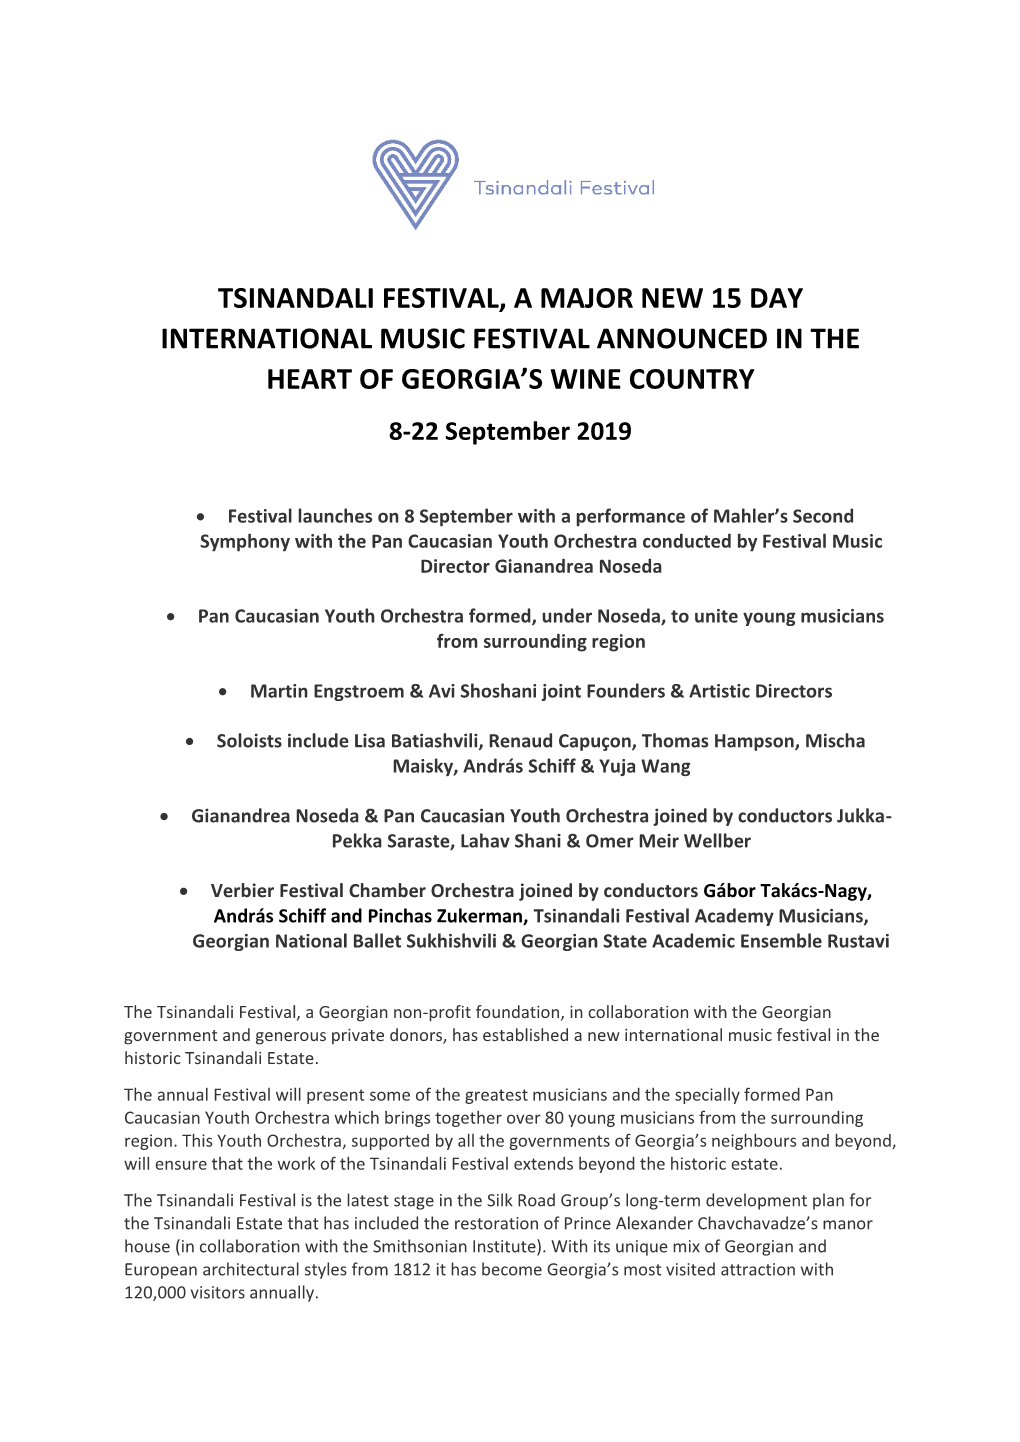 Tsinandali Festival, a Major New 15 Day International Music Festival Announced in the Heart of Georgia's Wine Country